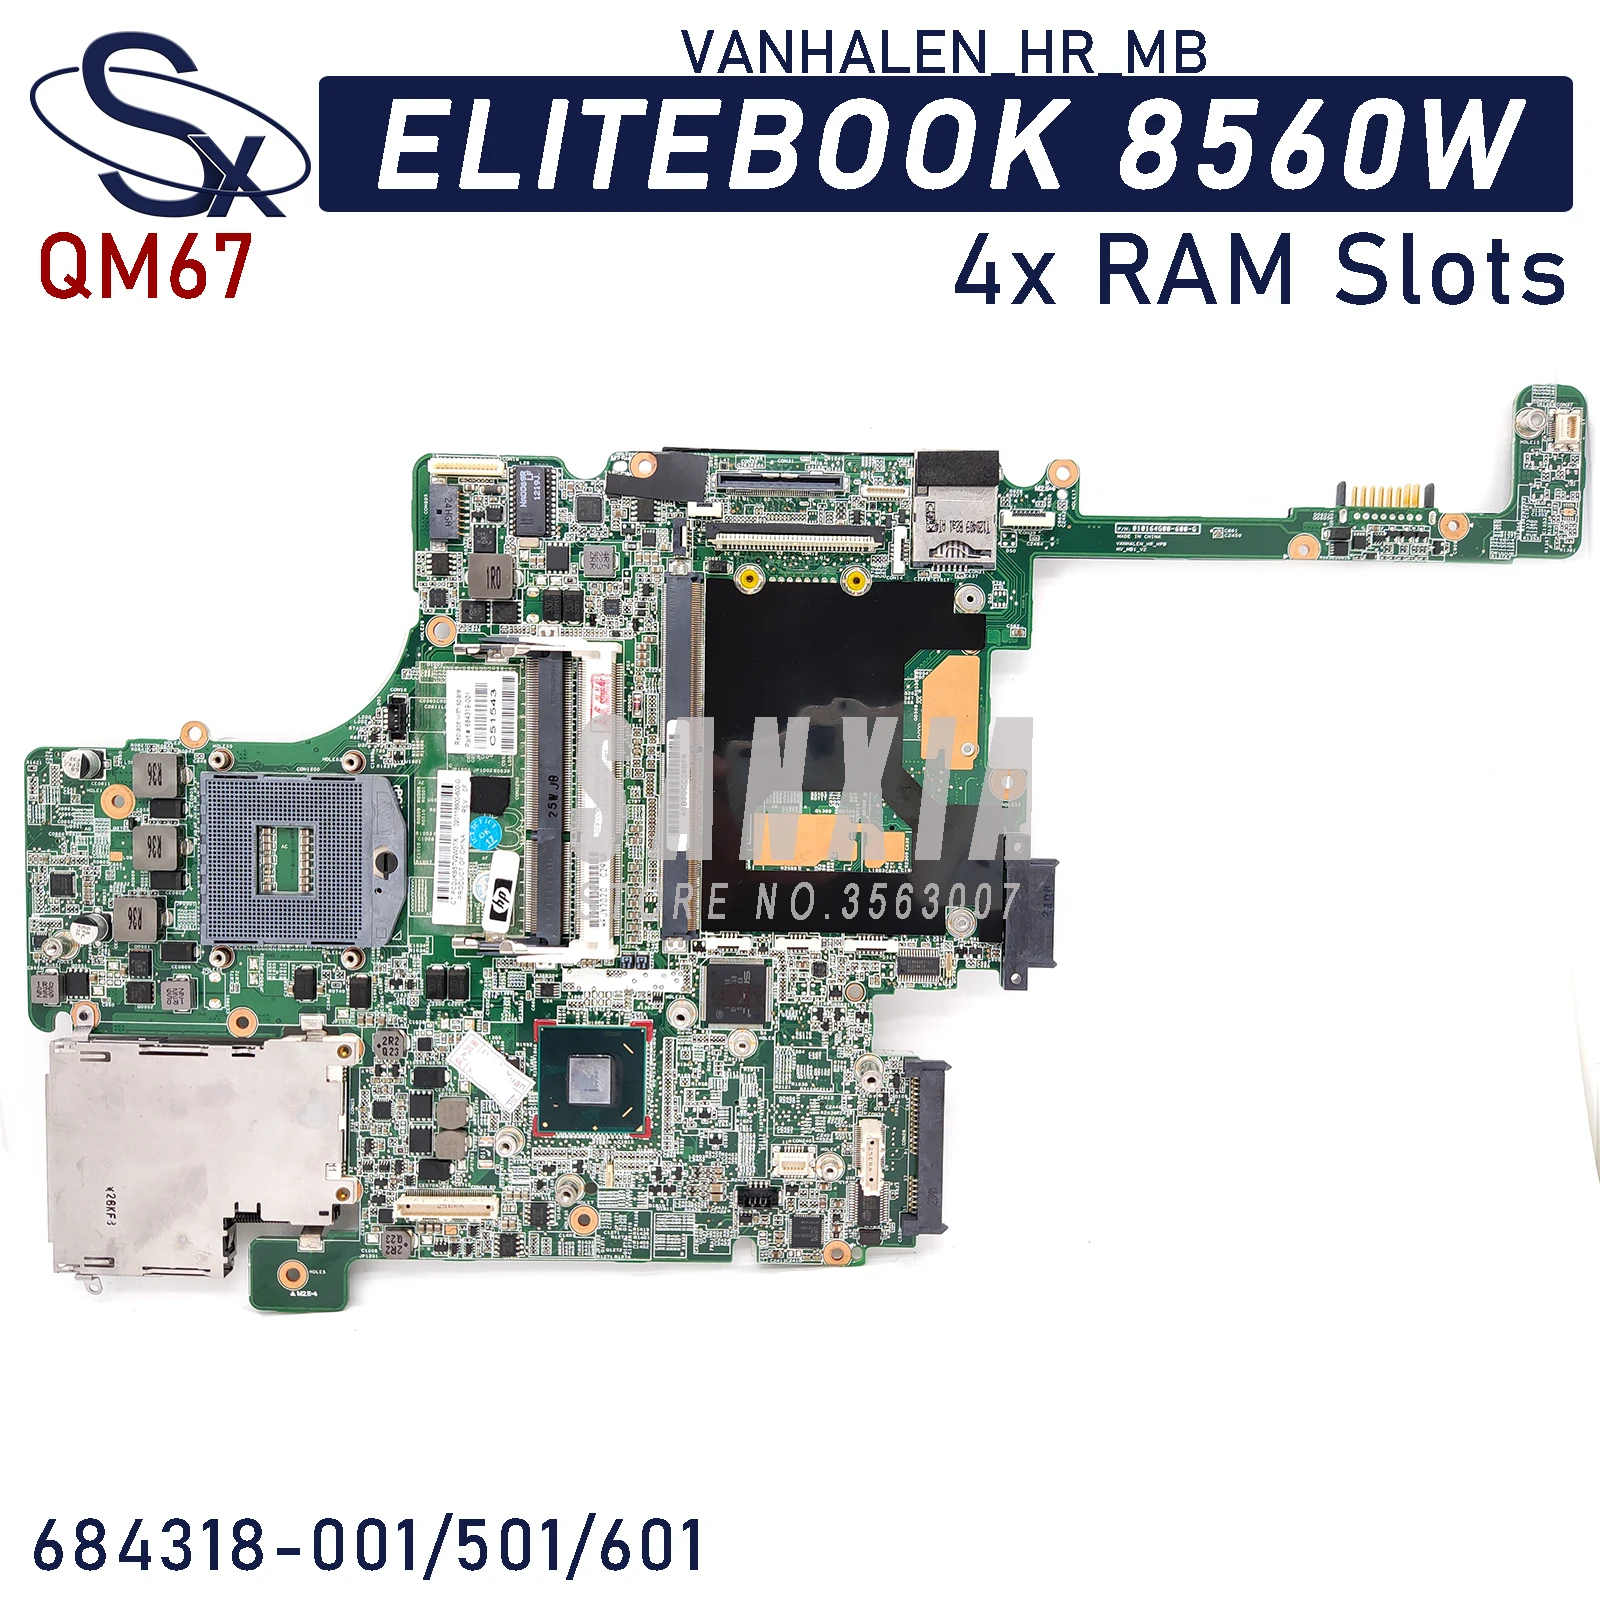 

KEFU VANHALEN_HR_MB Laptop motherboard for HP EliteBook 8560w original mainboard QM67 684318-001 684318-501 684318-601